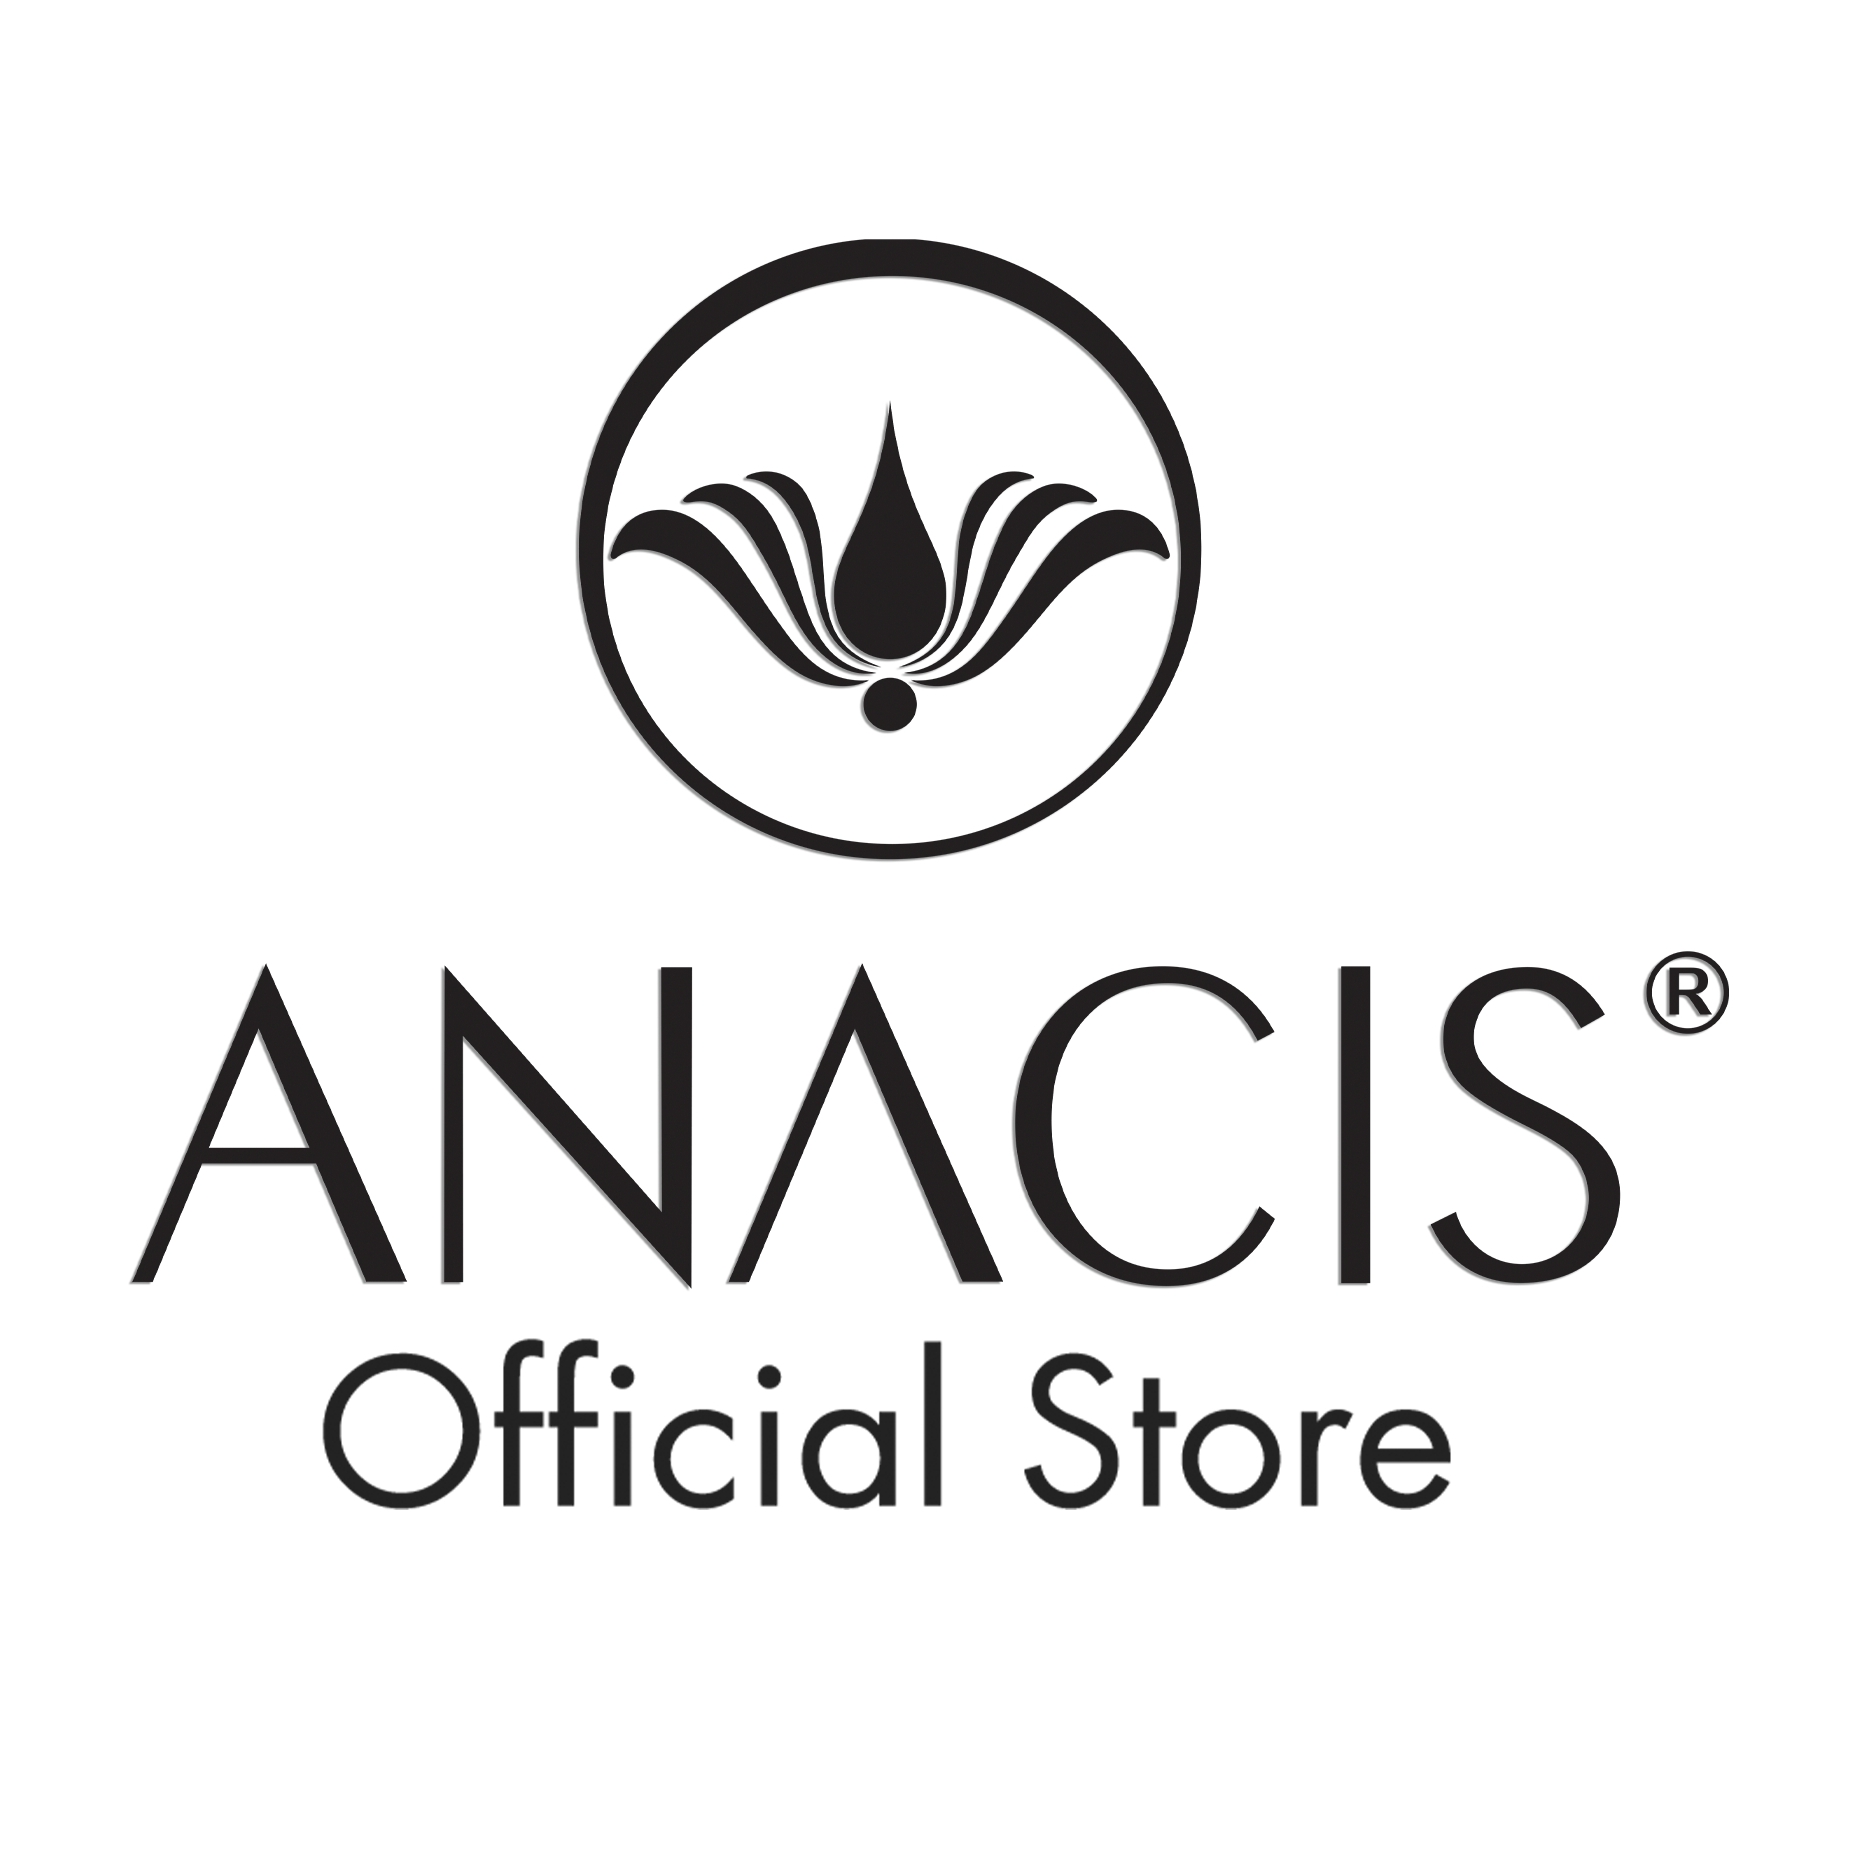 Anacis Vietnam Official Store